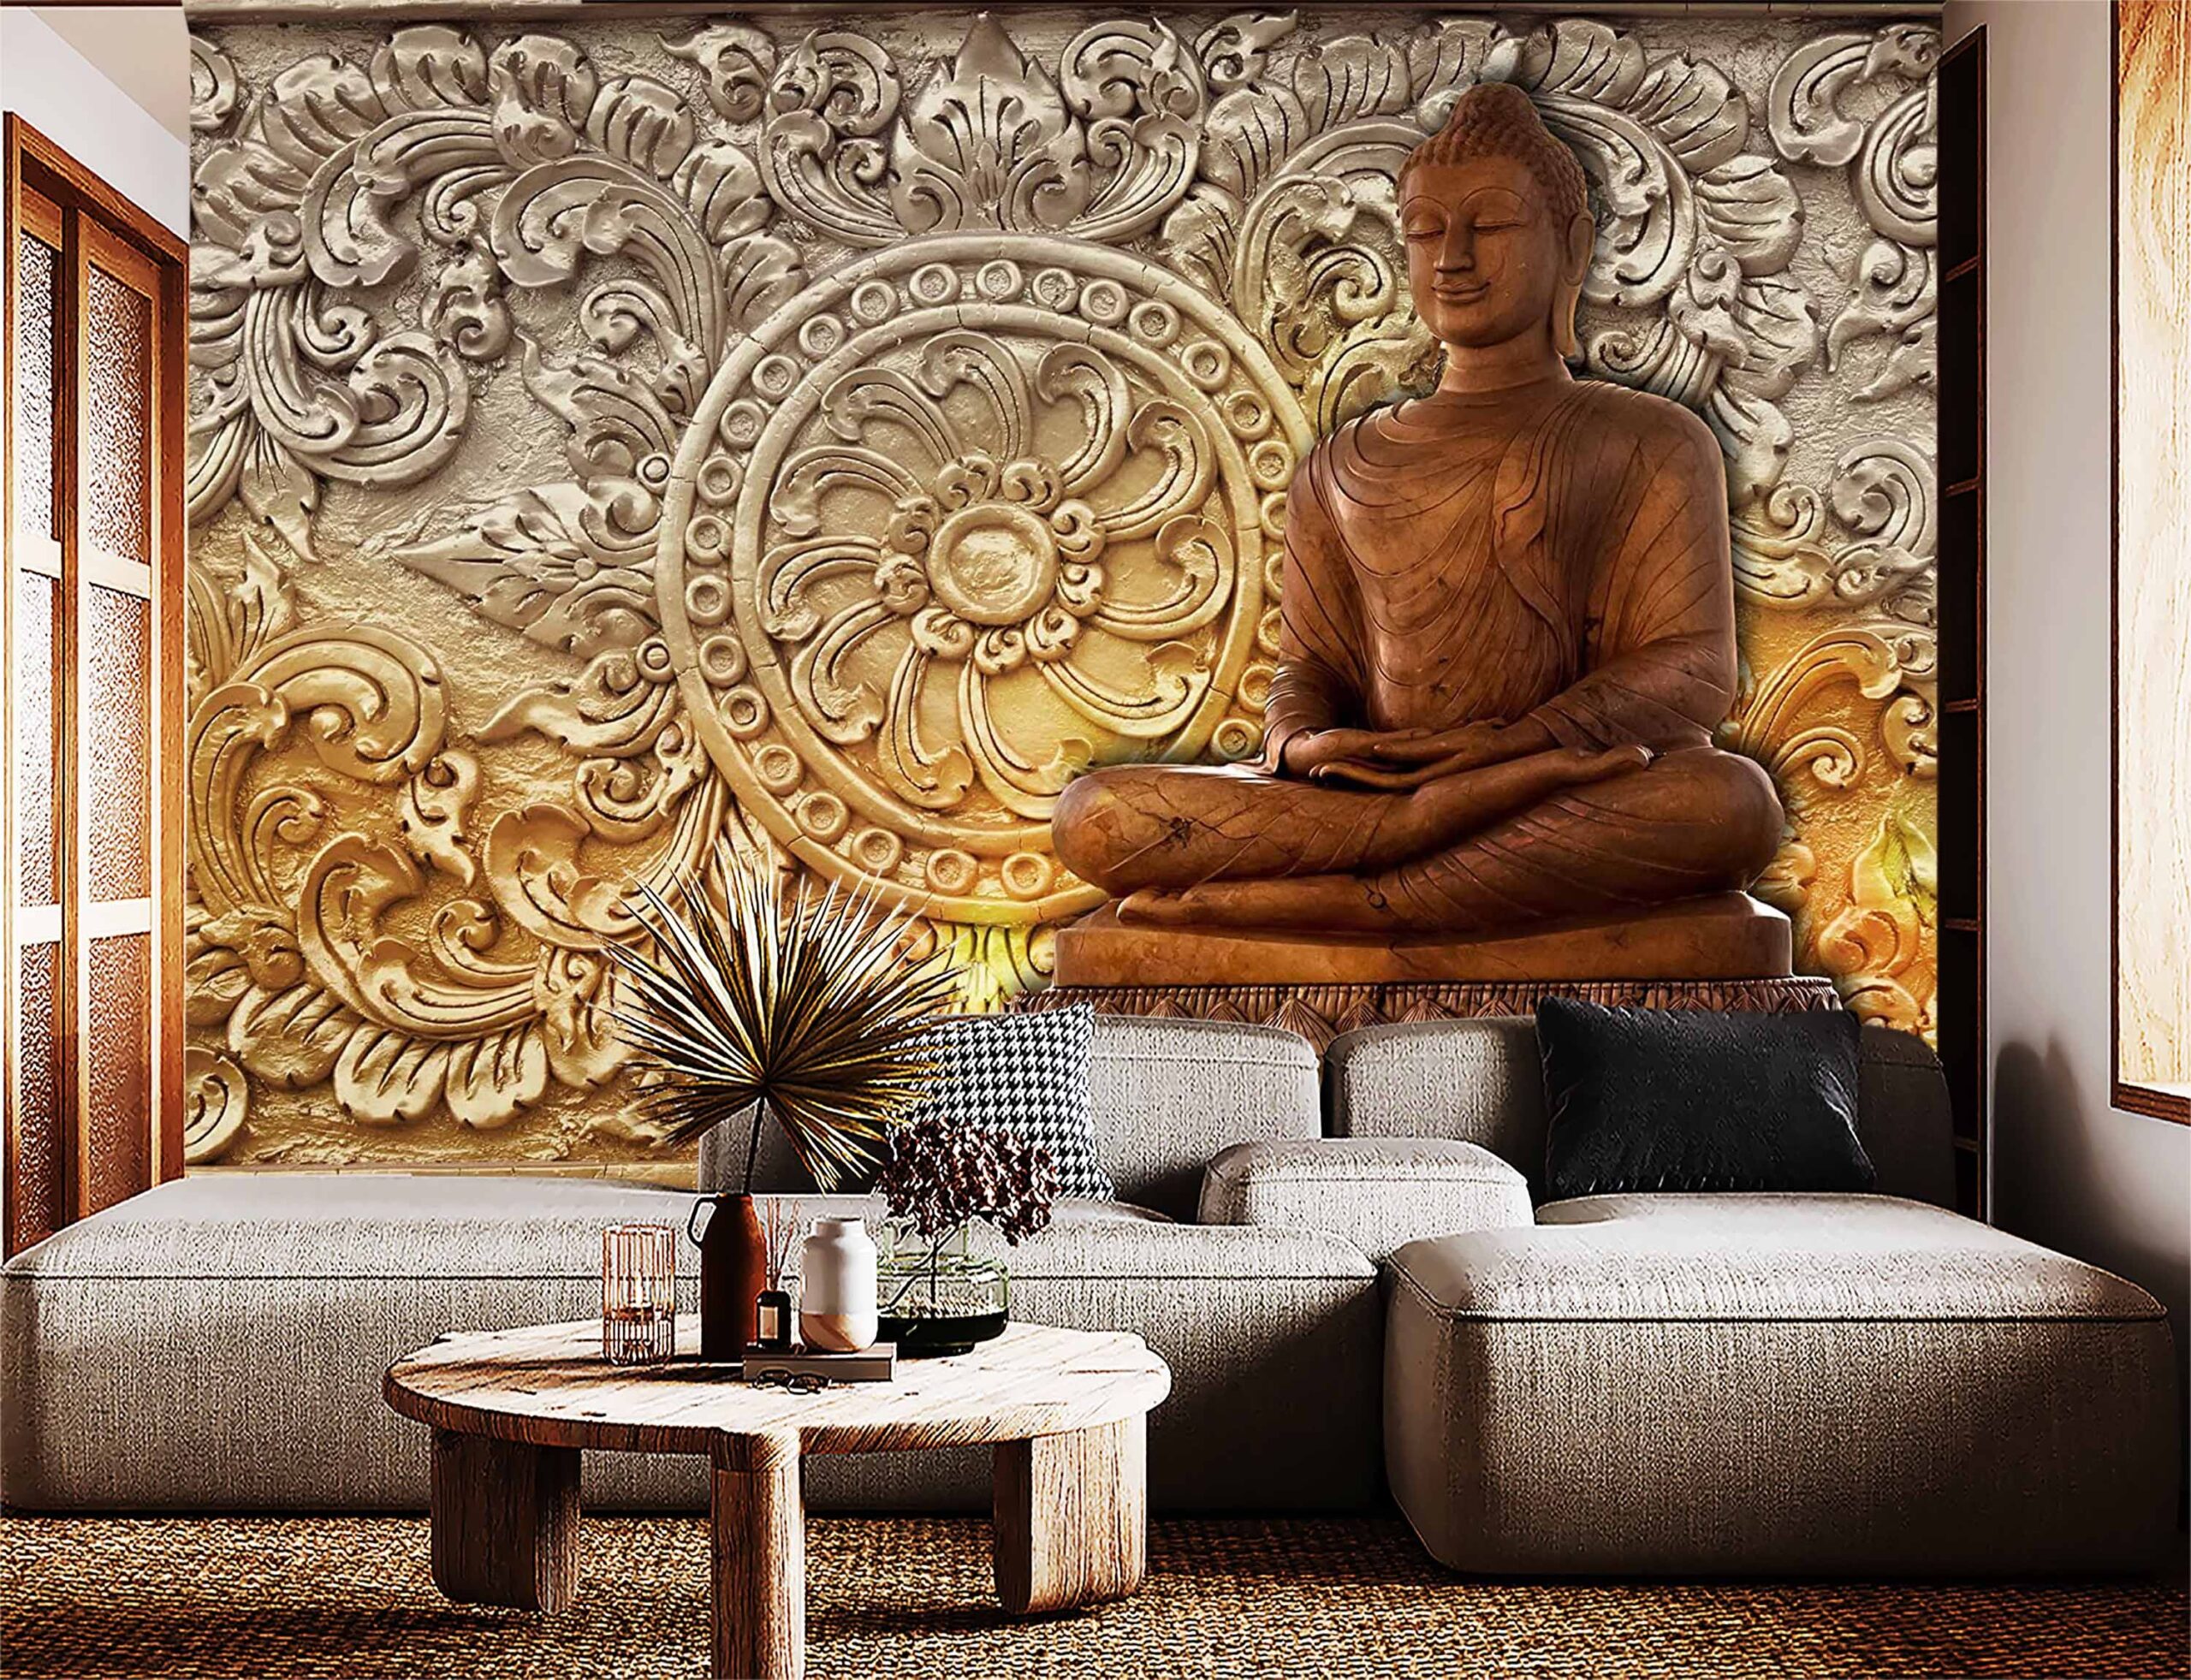 Buy Online - Meditating Lord Buddha Wallpaper, 3D Buddha Wallpaper,  Removable Peel & Stick Wallpaper, Buddha Wall Mural, Self Adhesive Vinyl  Wall Sticker in US